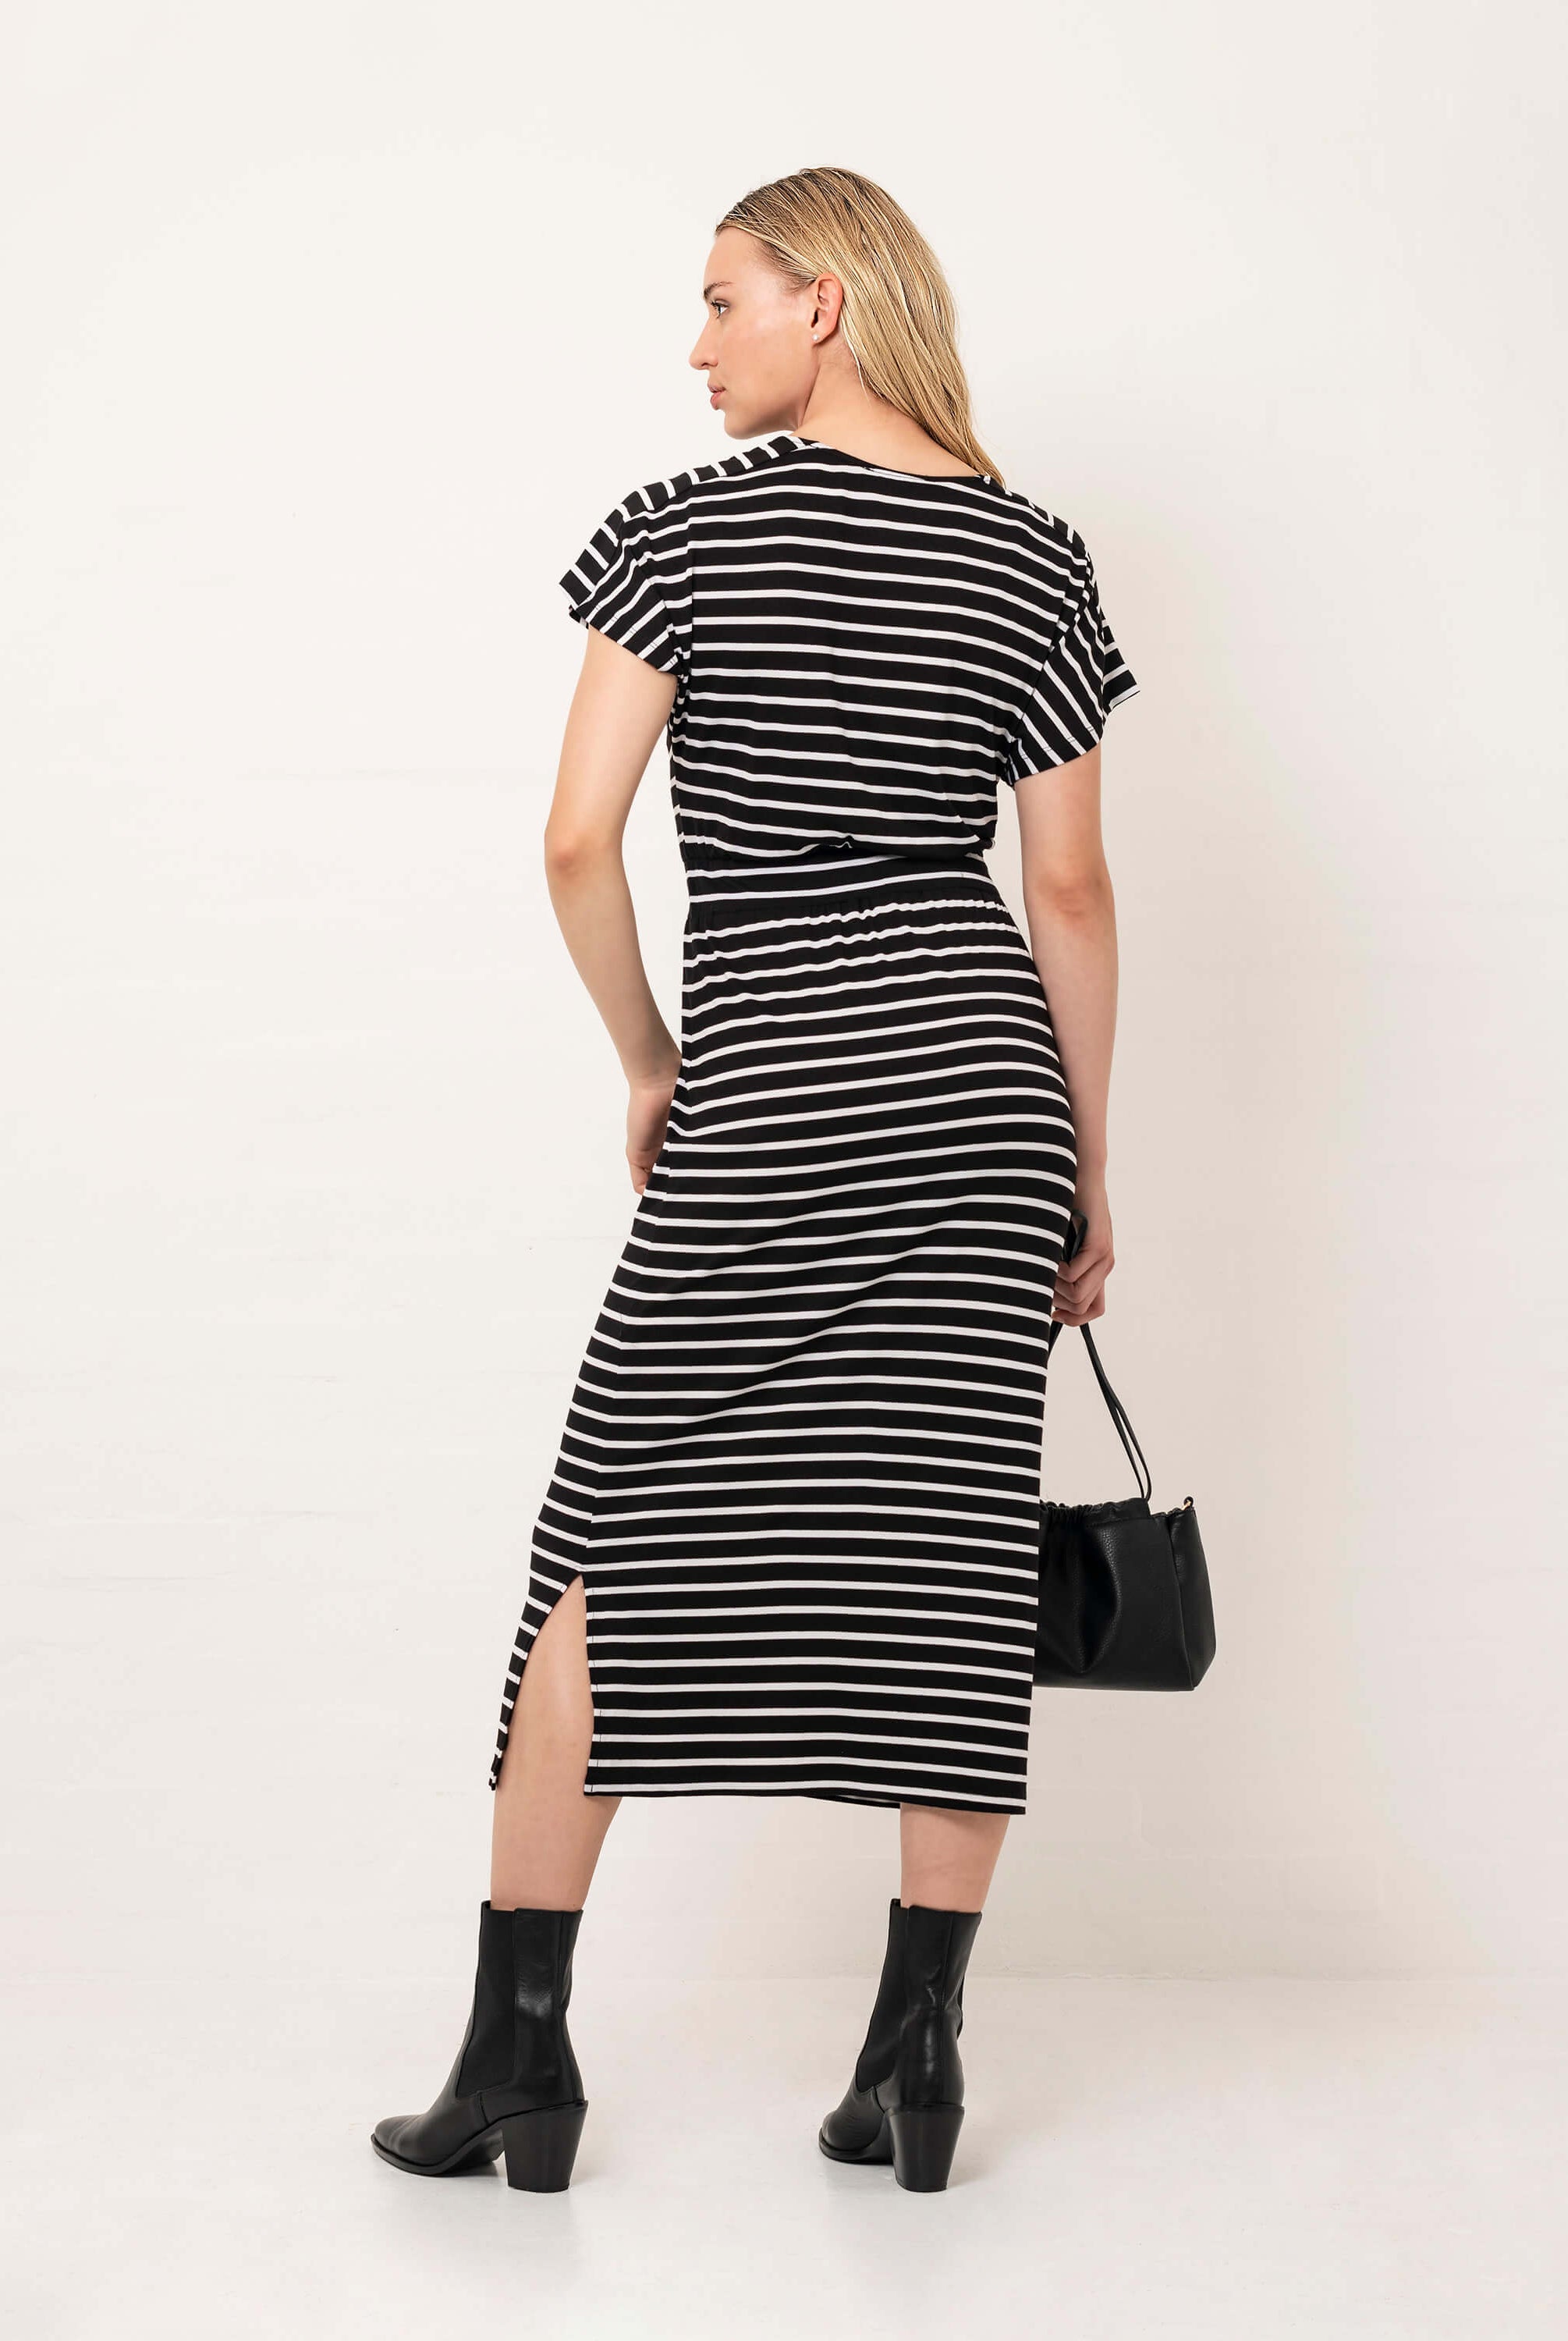 Striped Dresses uk